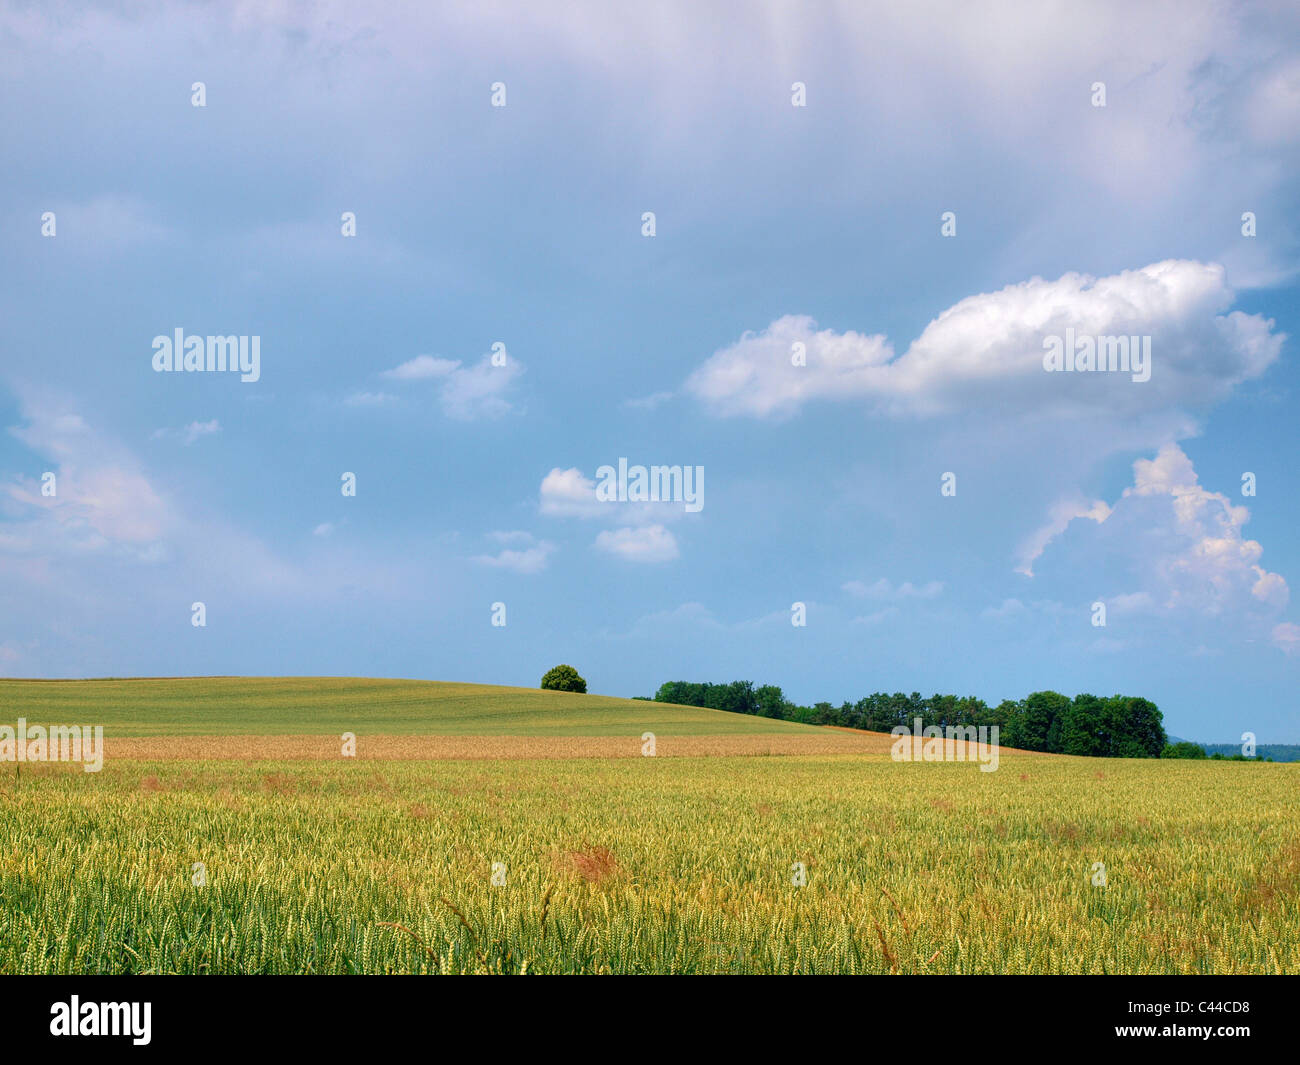 Gently, Oberglatt, wheat field, clouds, canton Zurich, field, grain, agriculture, Stock Photo